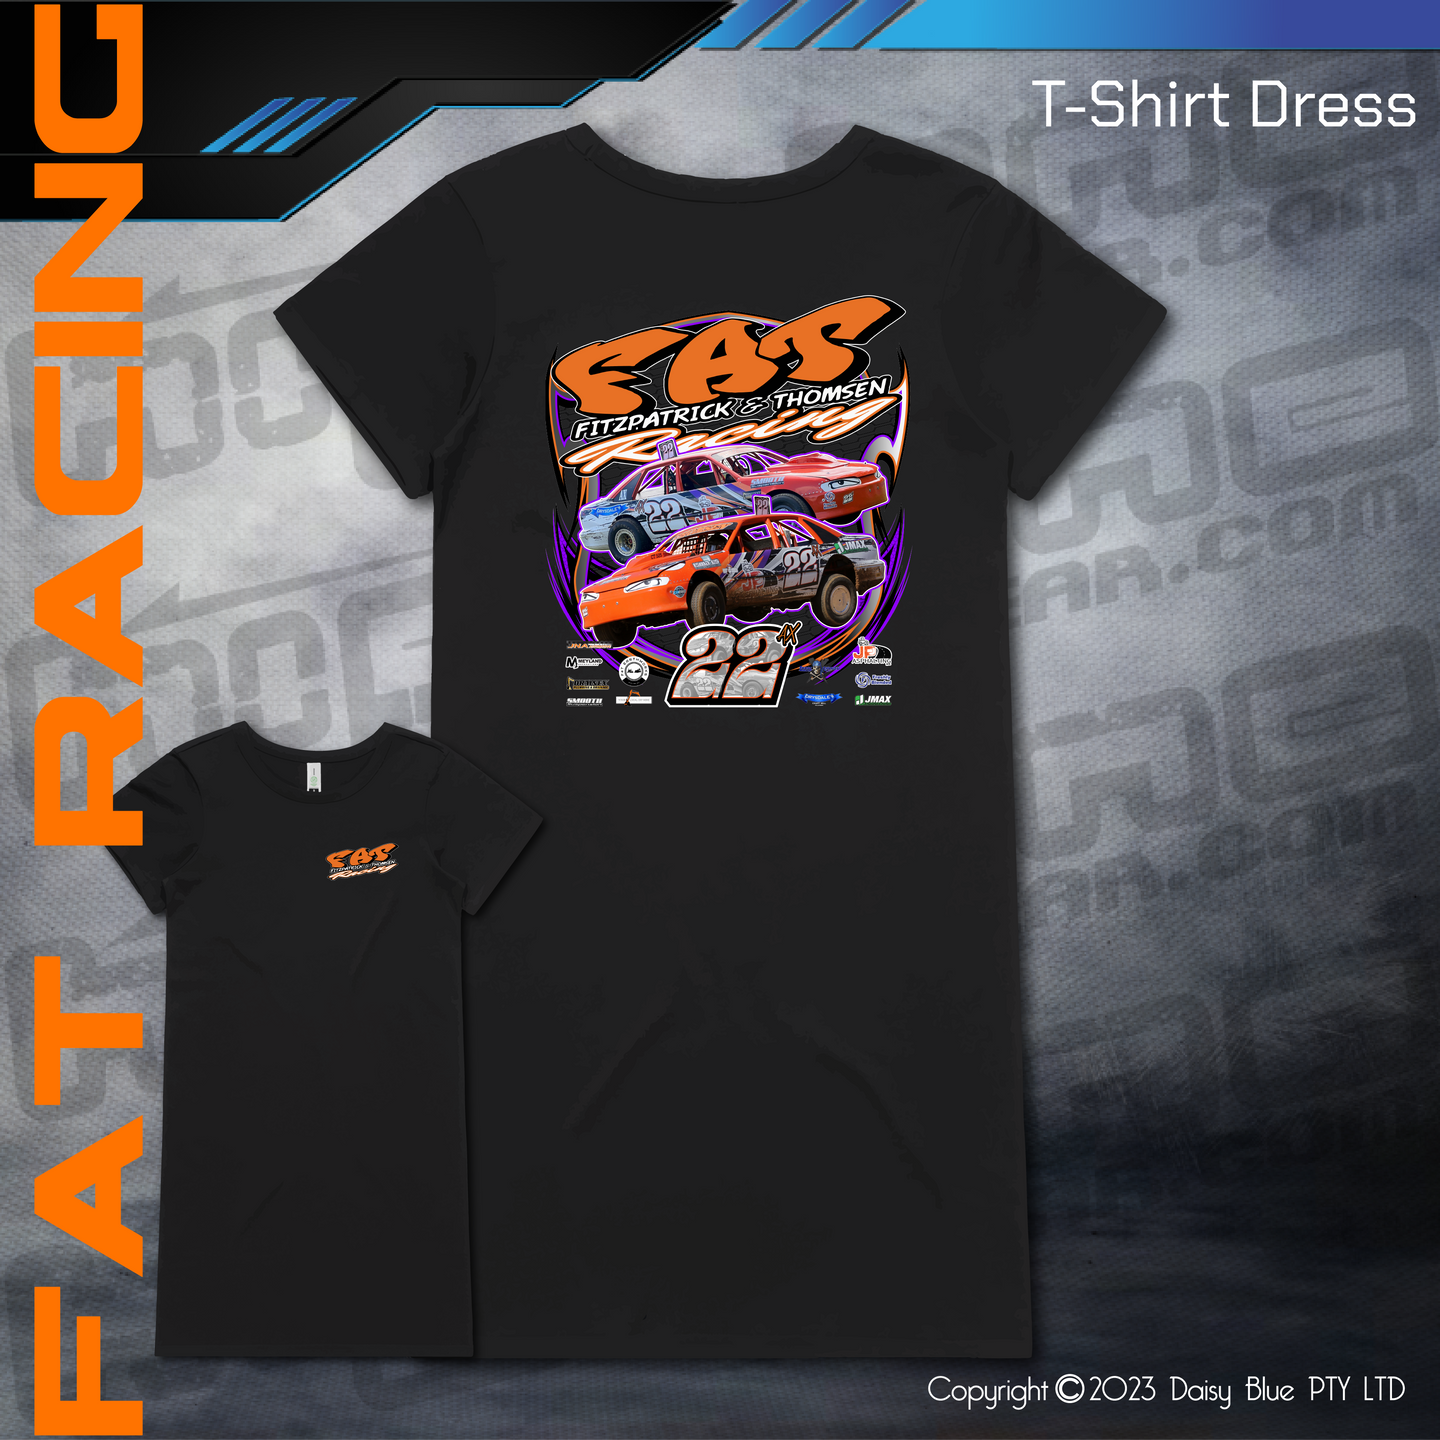 T-Shirt Dress - FAT Racing